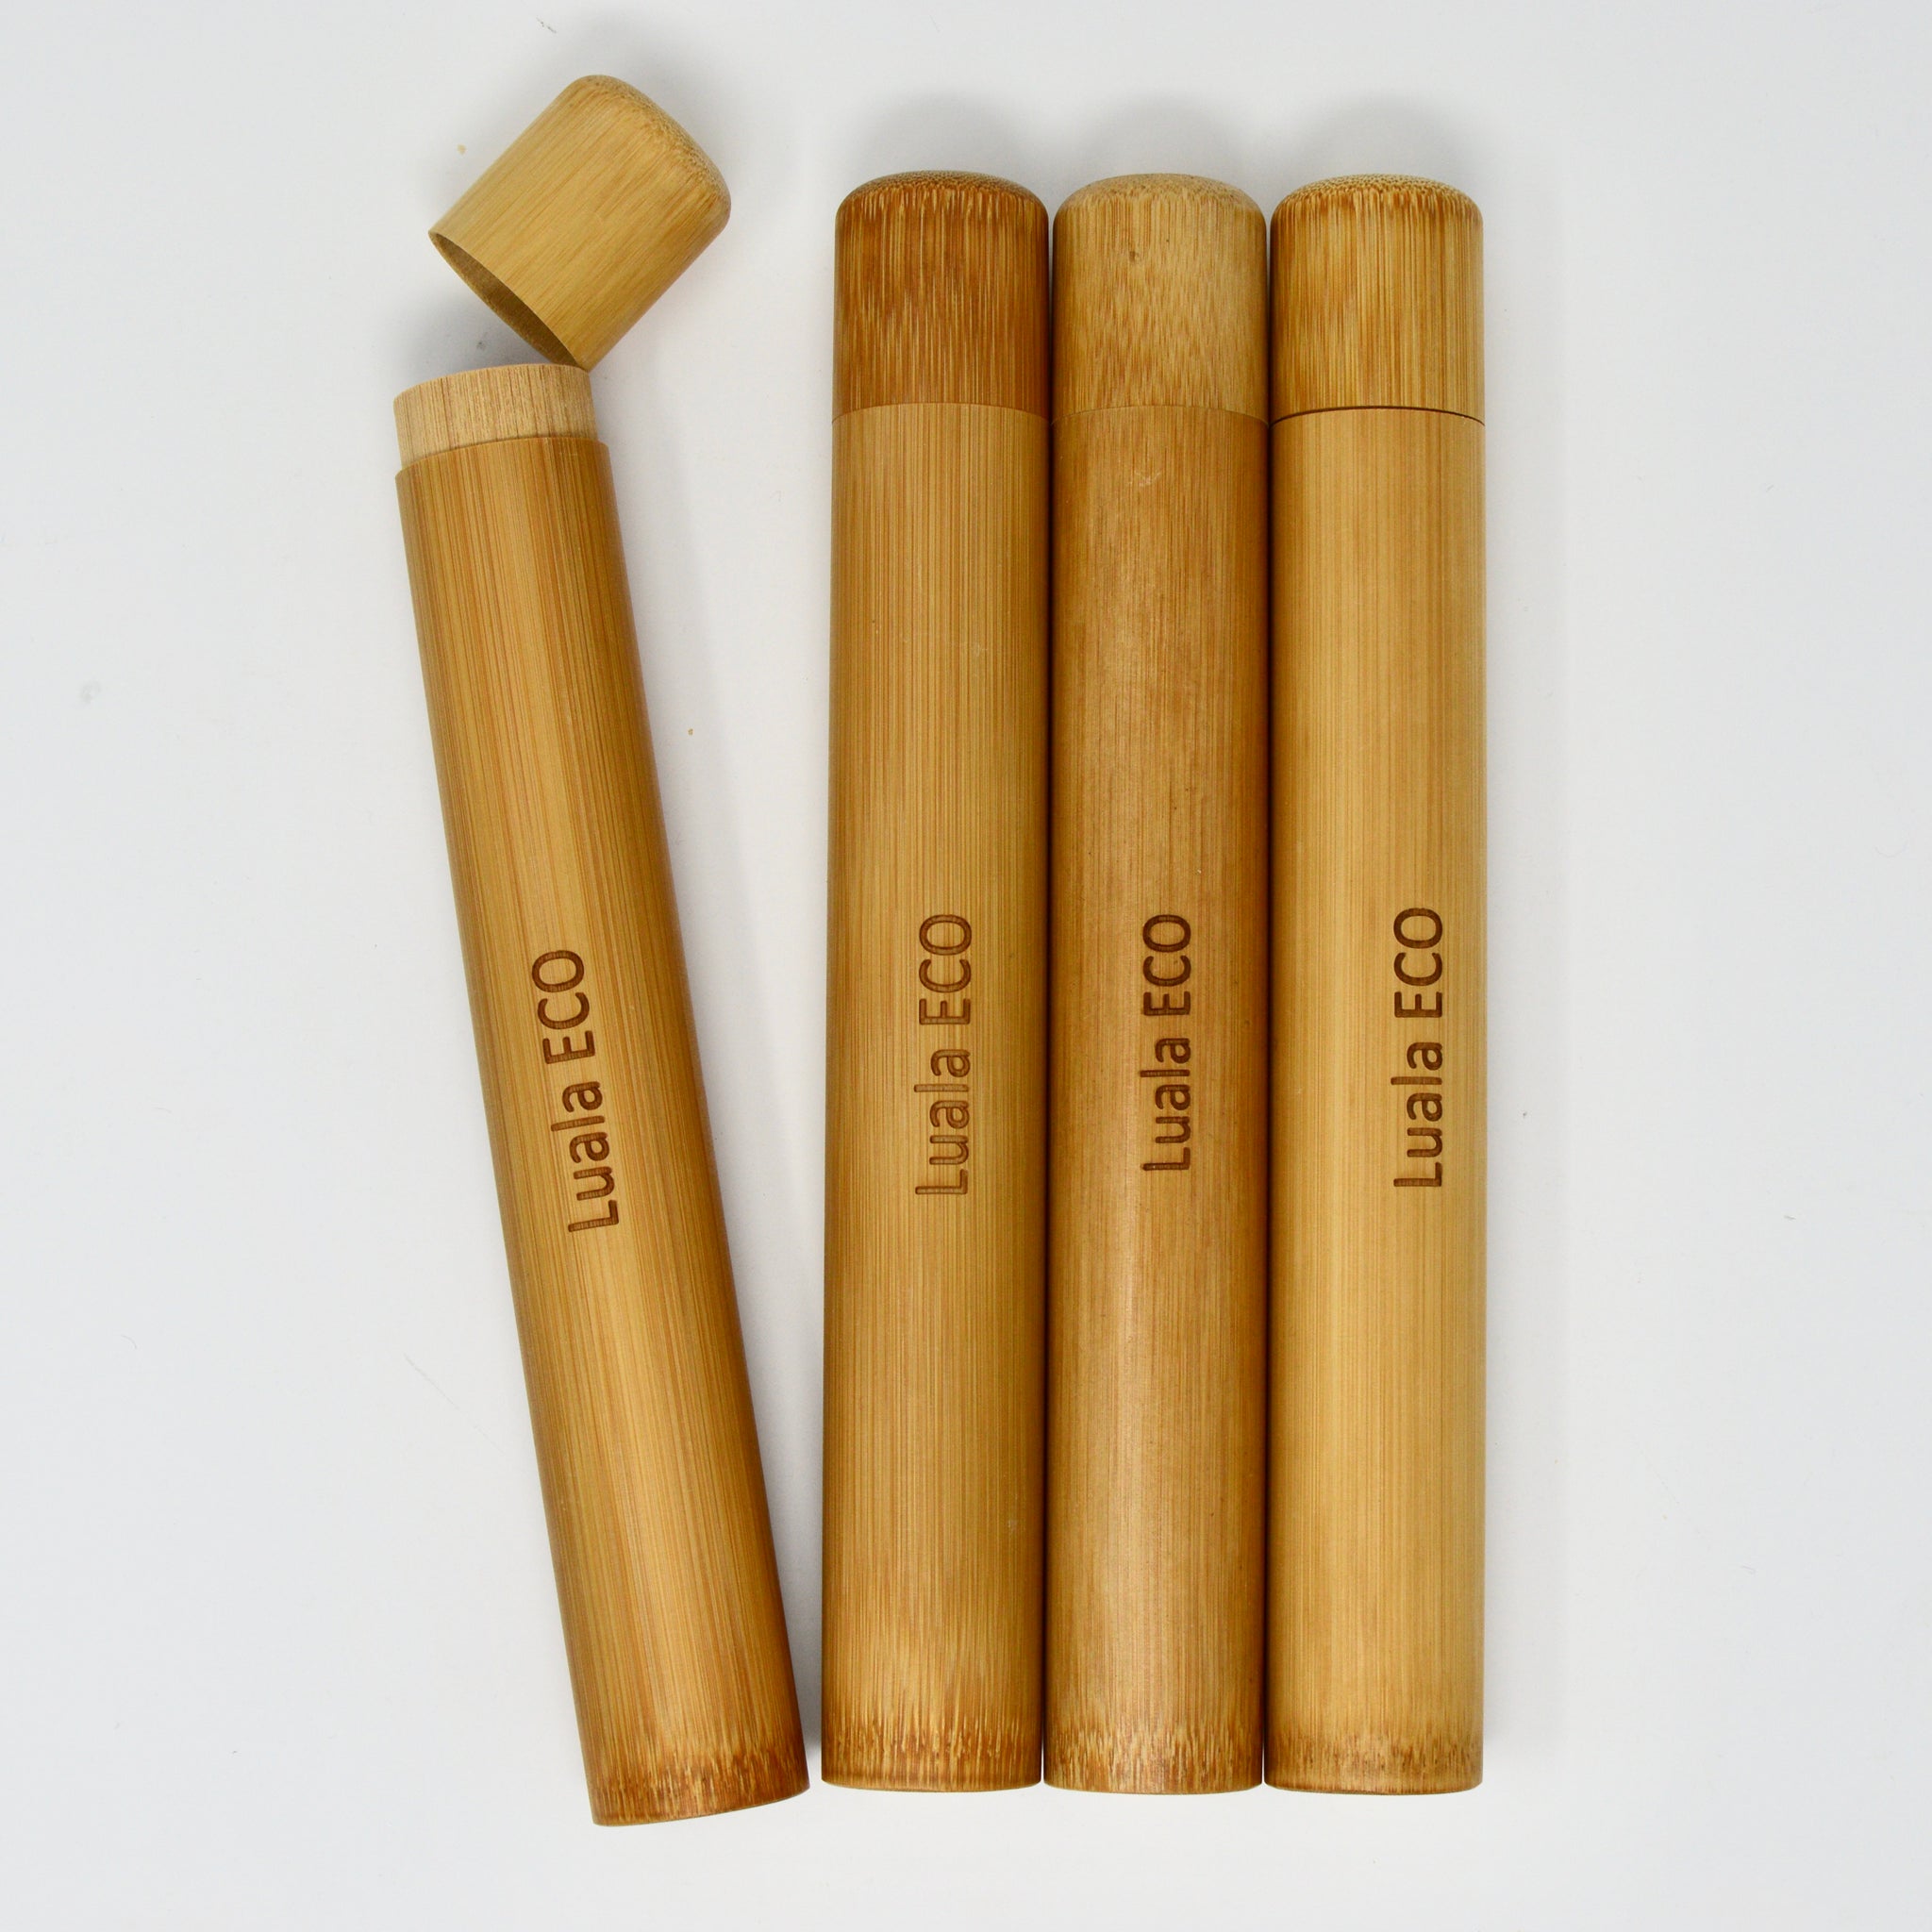 Reusable Bamboo Straws- Single Eco Pack